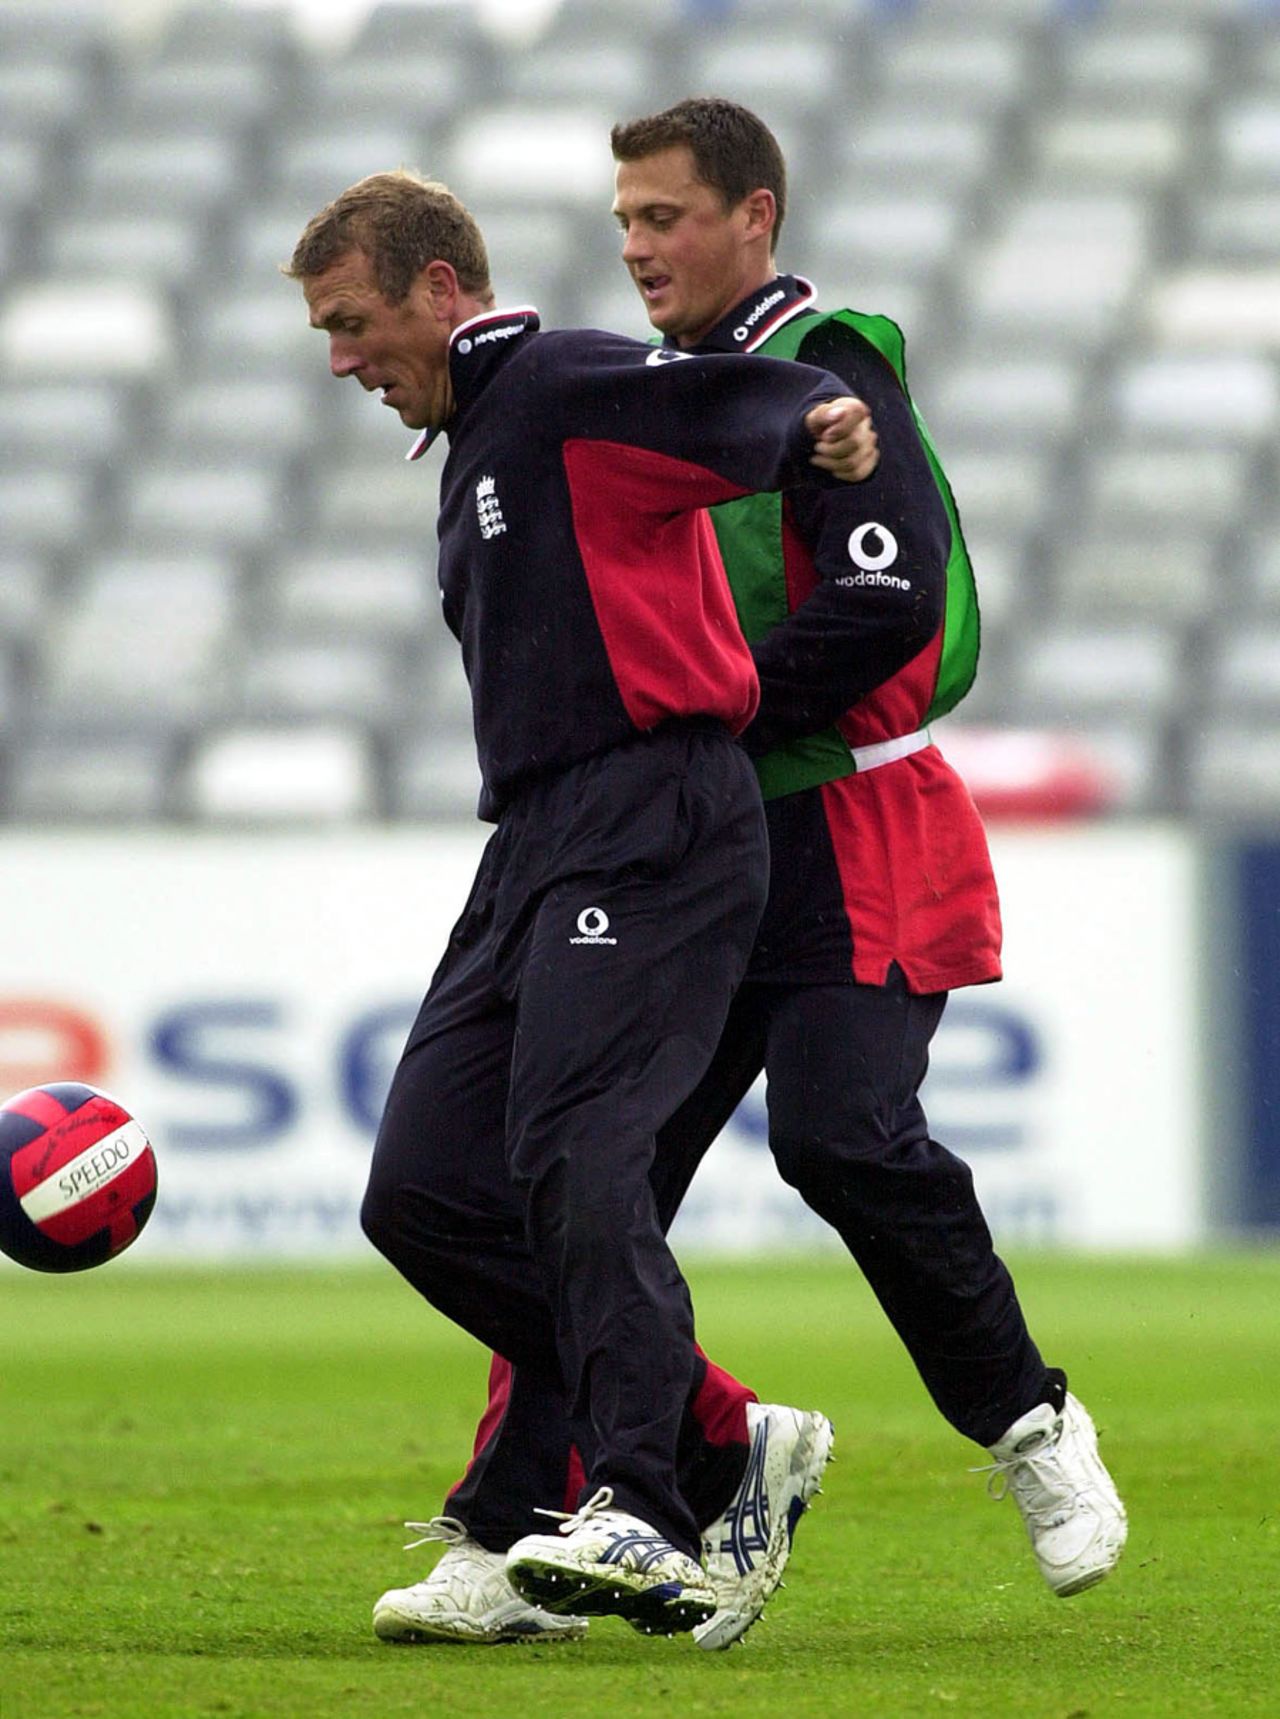 Alec Stewart and Darren Gough play football, Headingley, June 16, 2001